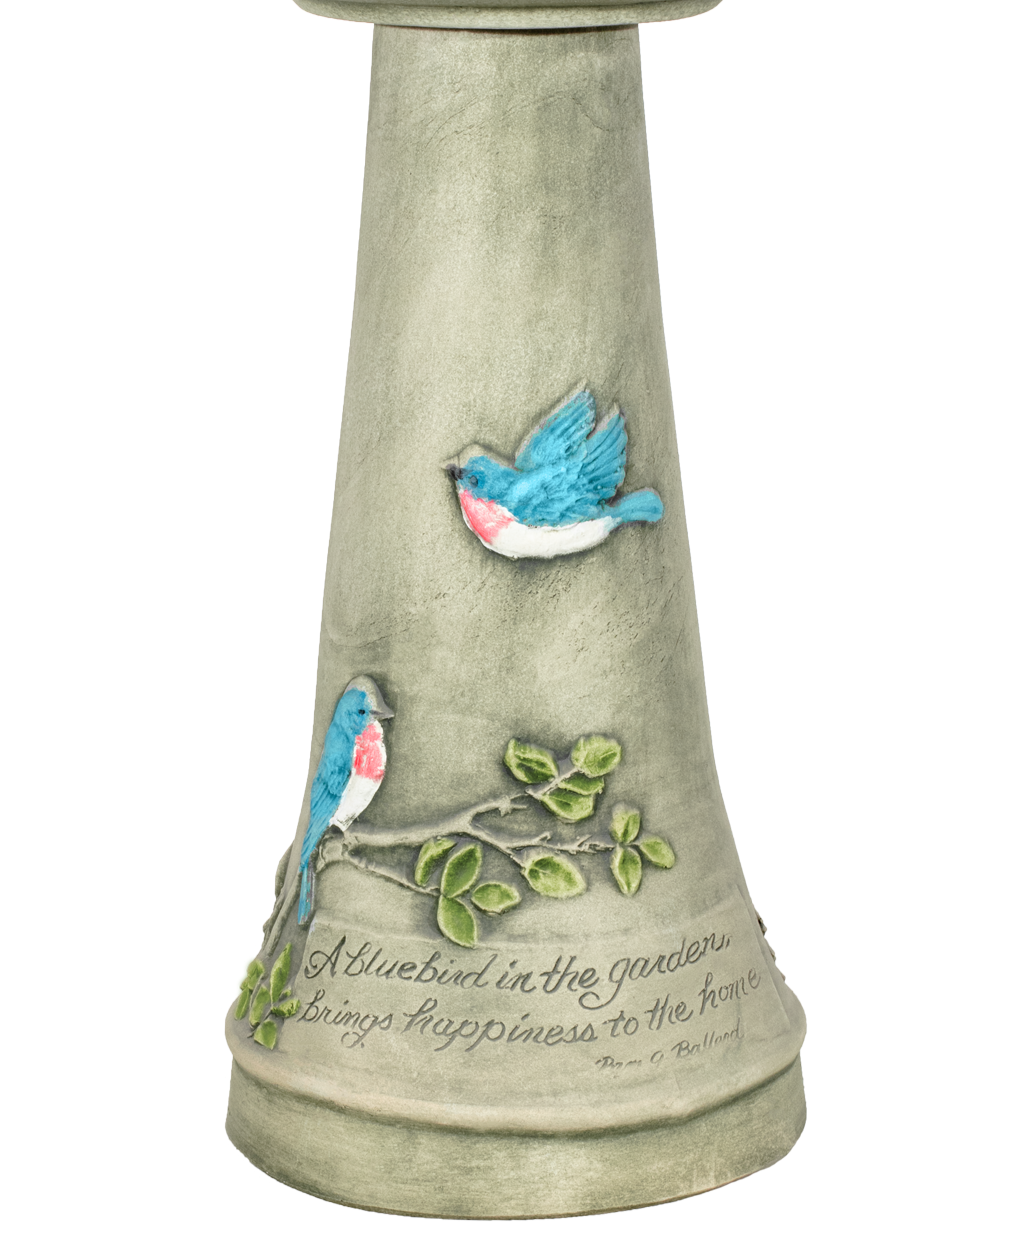 ceramic birdbath pedestal with hand painted bluebird design and saying